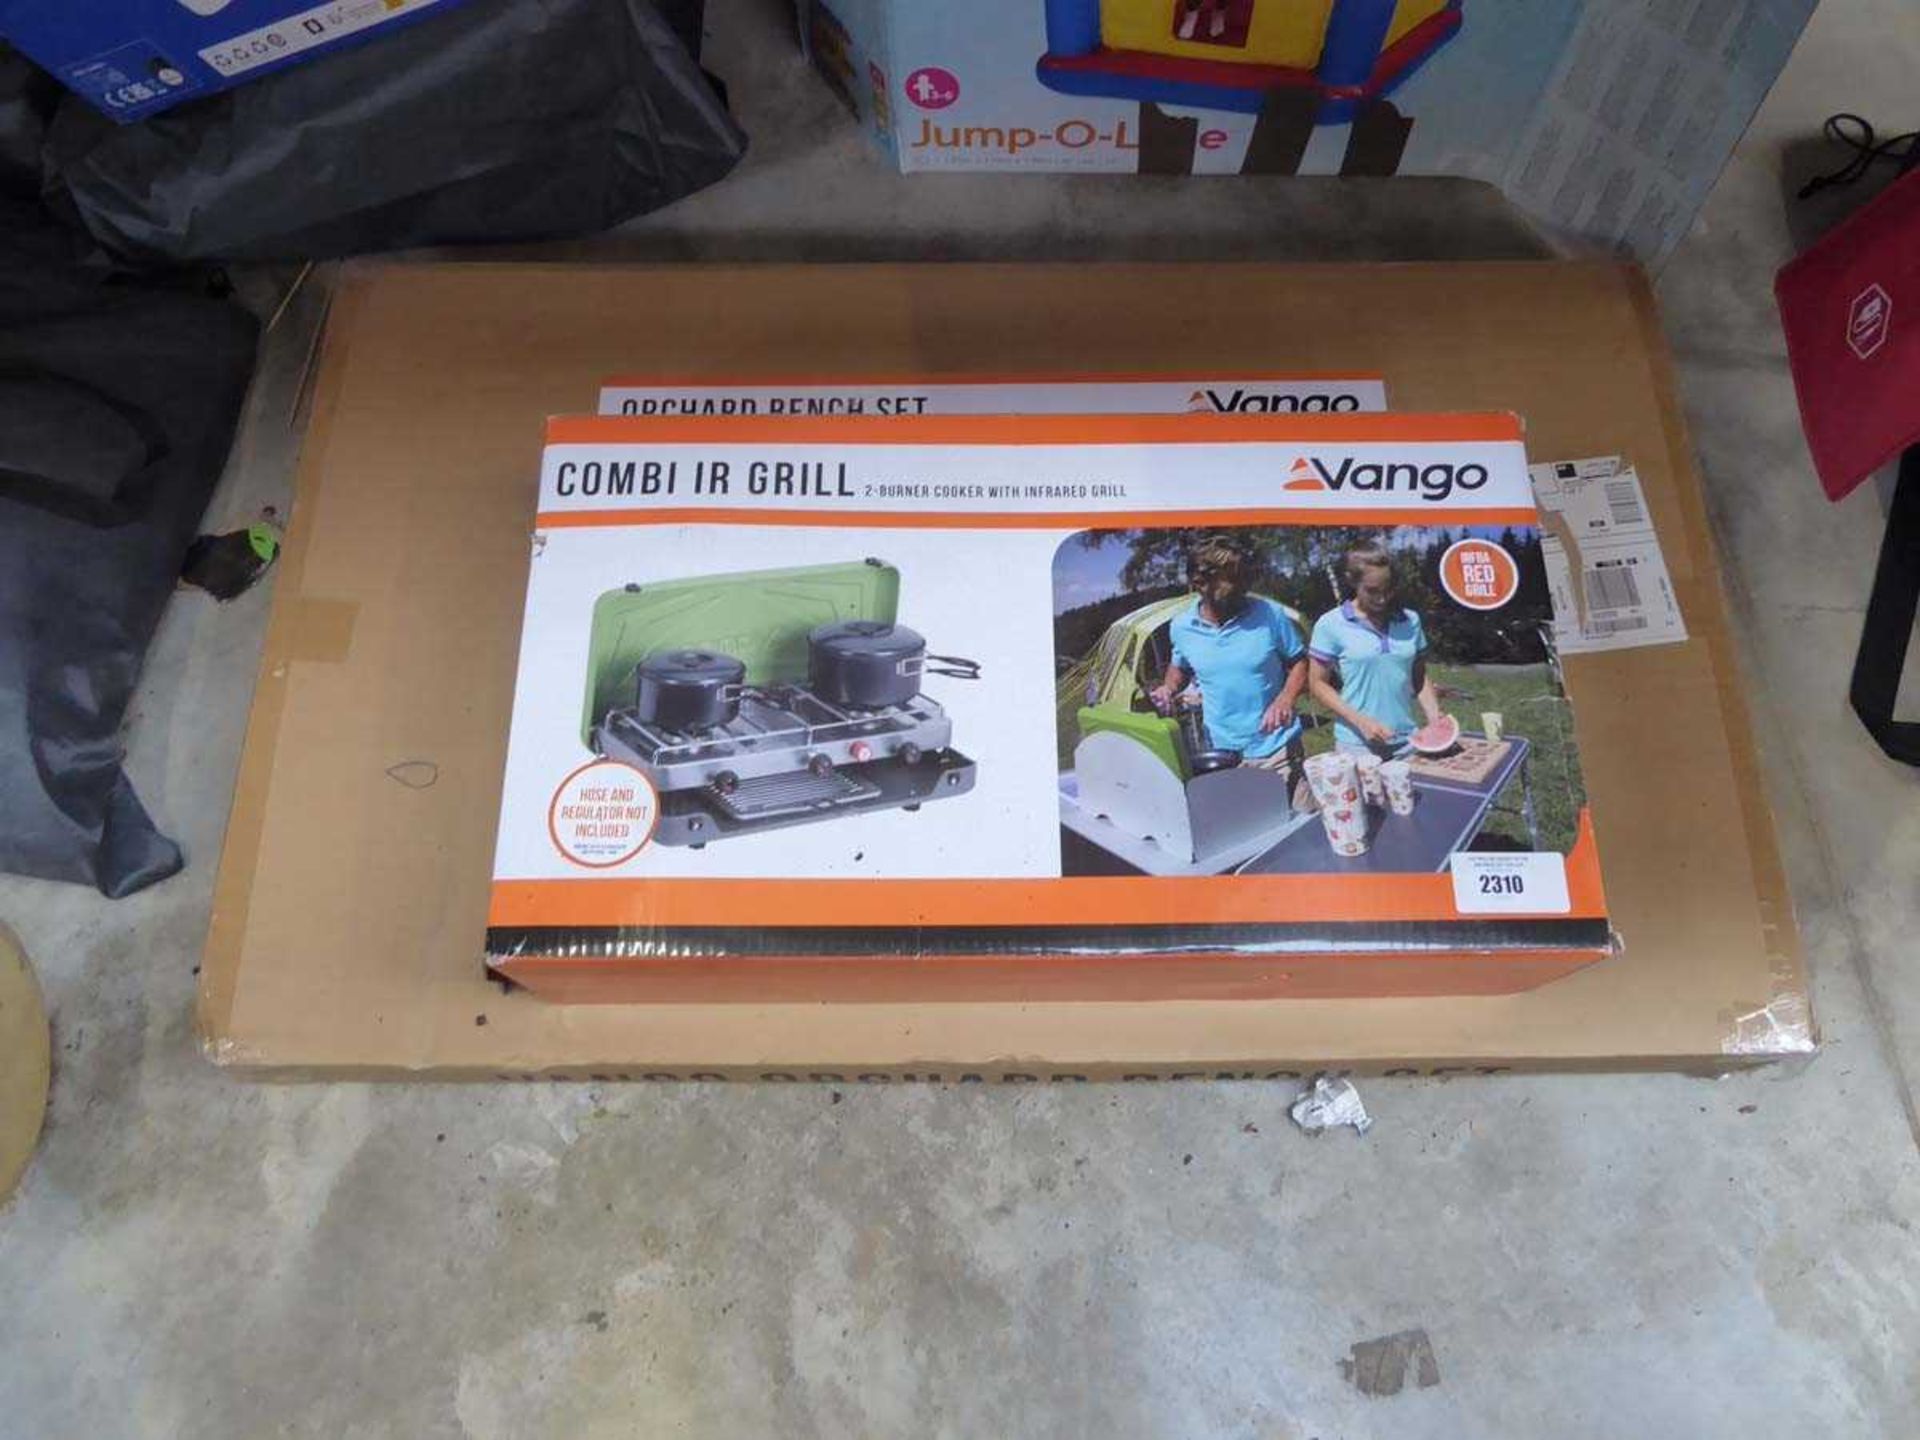 +VAT Boxed Vango Orchard collapsible bench set with Vango Combi IR 2 burner cooker grill